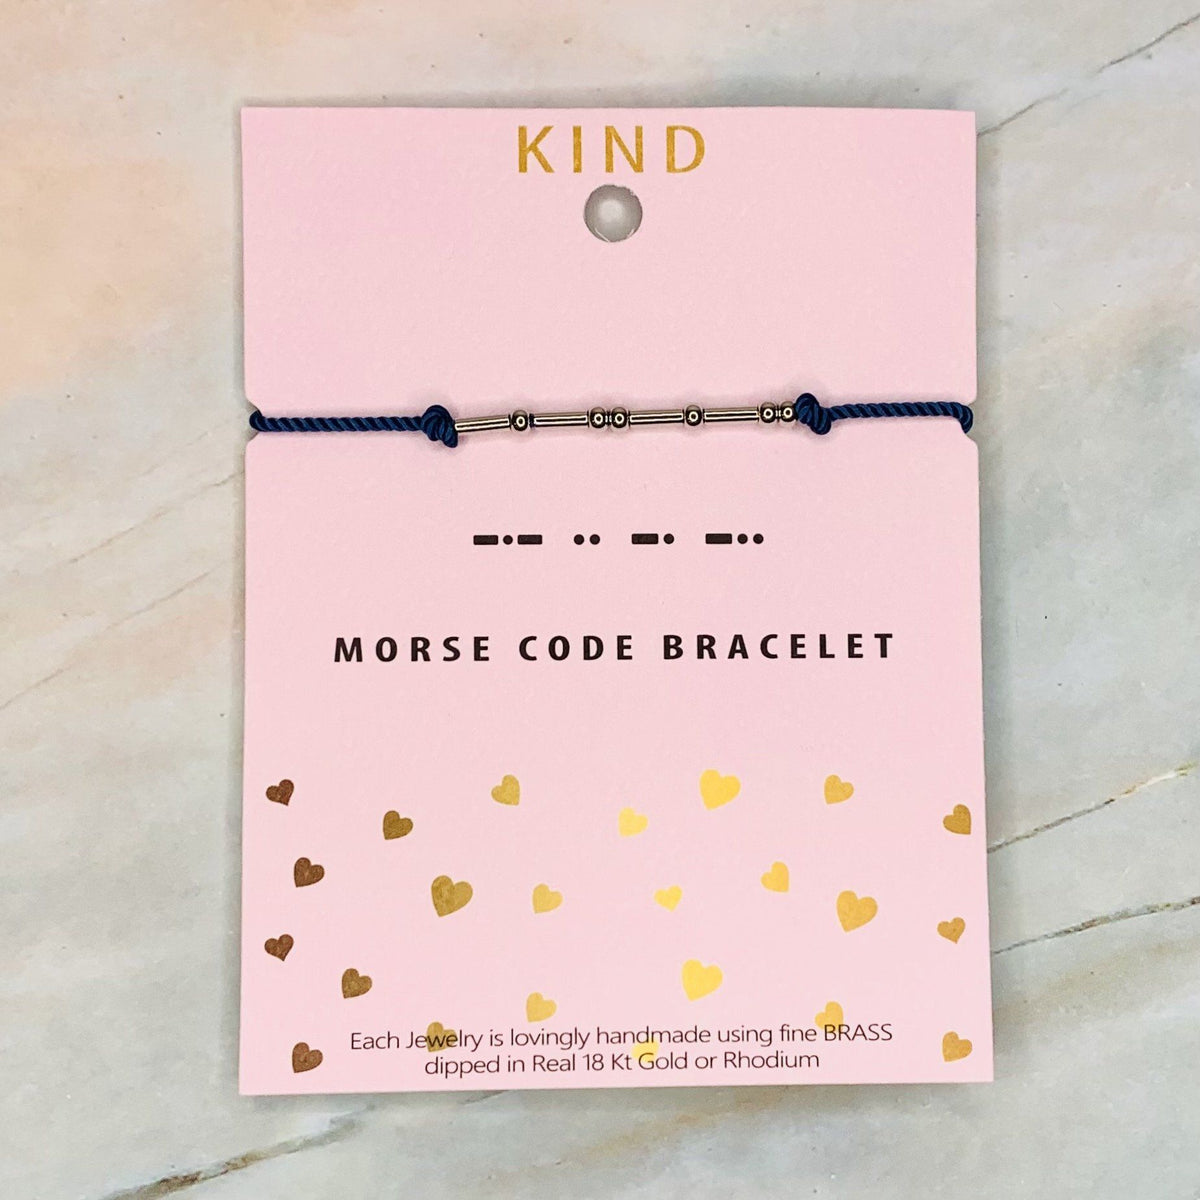 Morse Code Bracelet Jewelry Lauren-Spencer Kind 